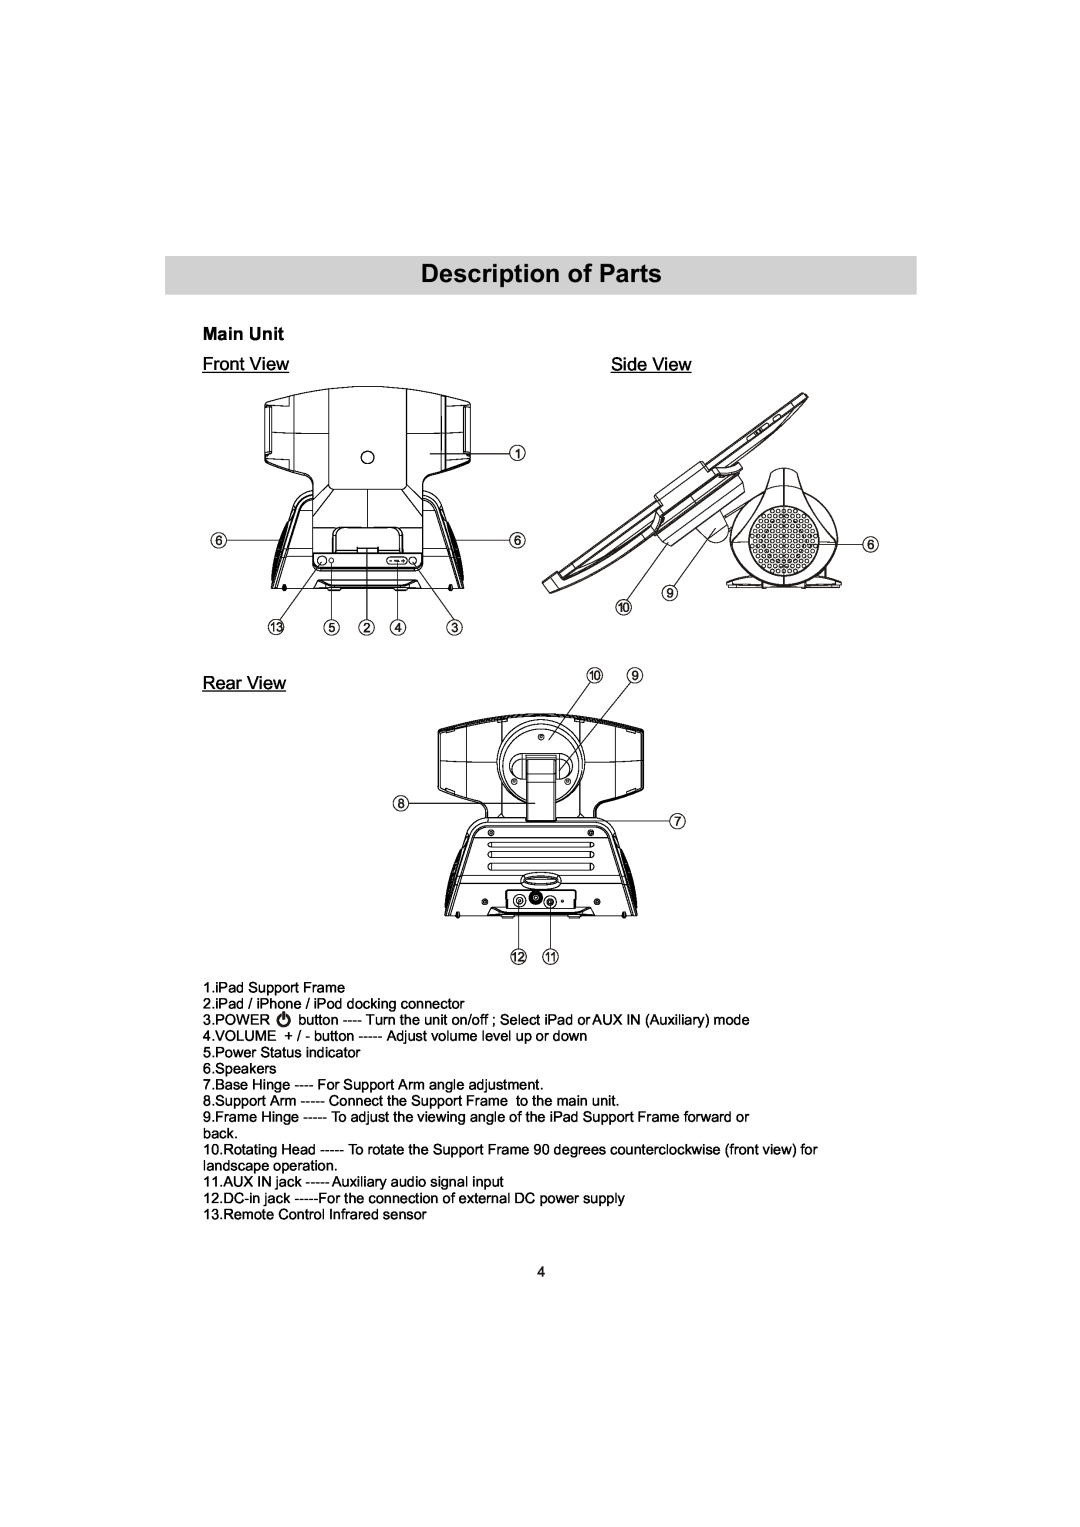 Haier IPD-01 manual Description of Parts, Main Unit, Front View, Side View, Rear View 